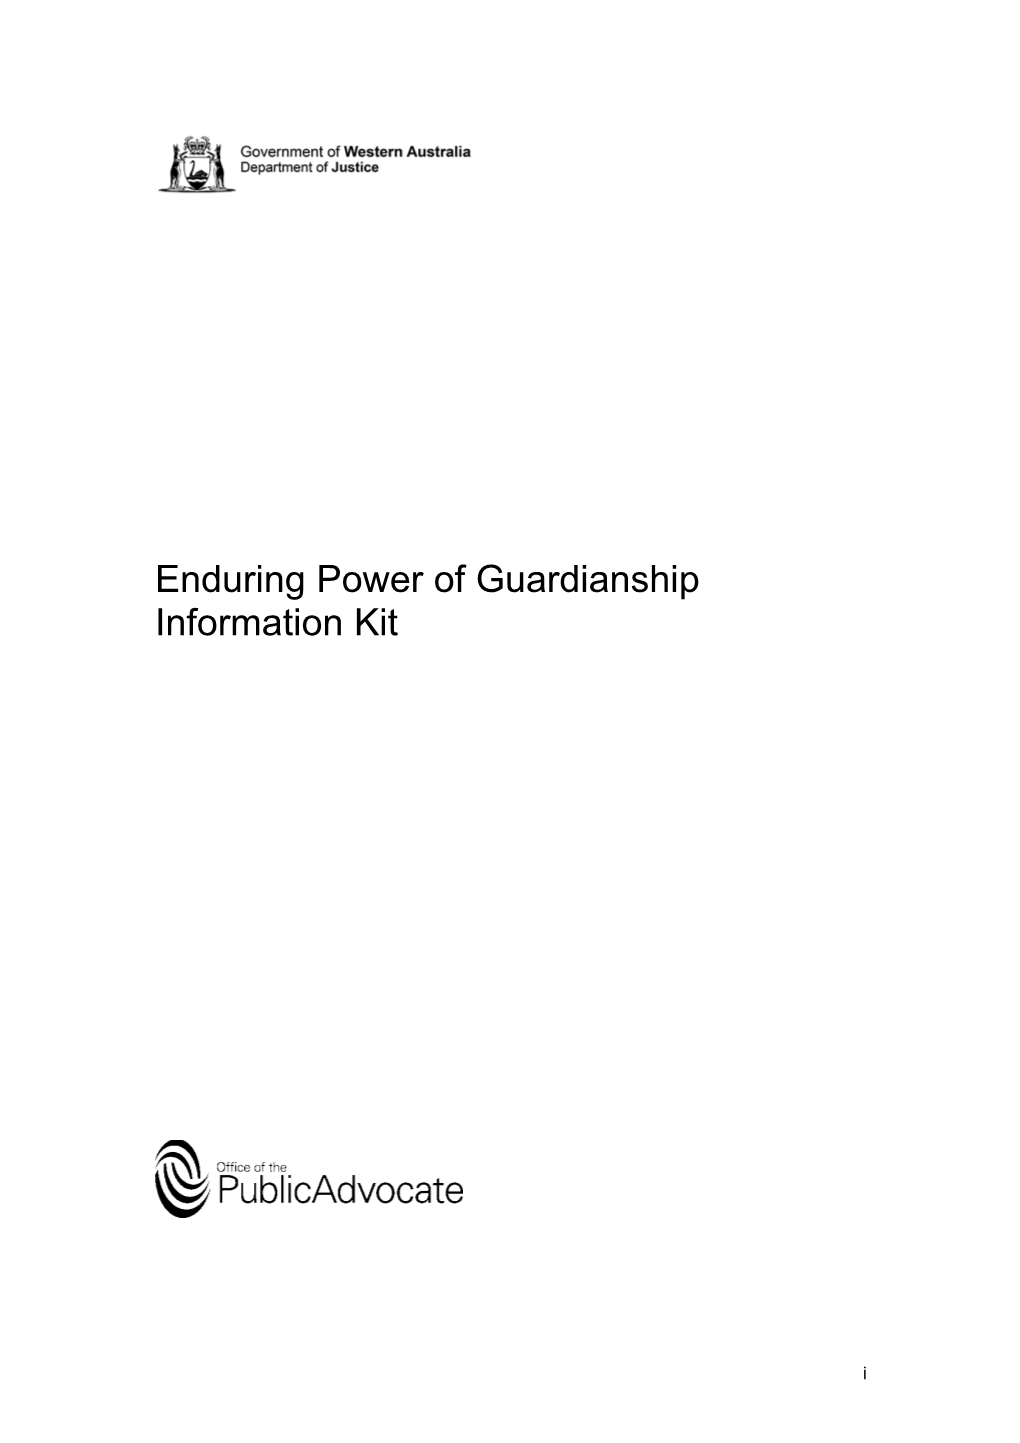 Enduring Power of Guardianship Information Kit - Without EPG Form